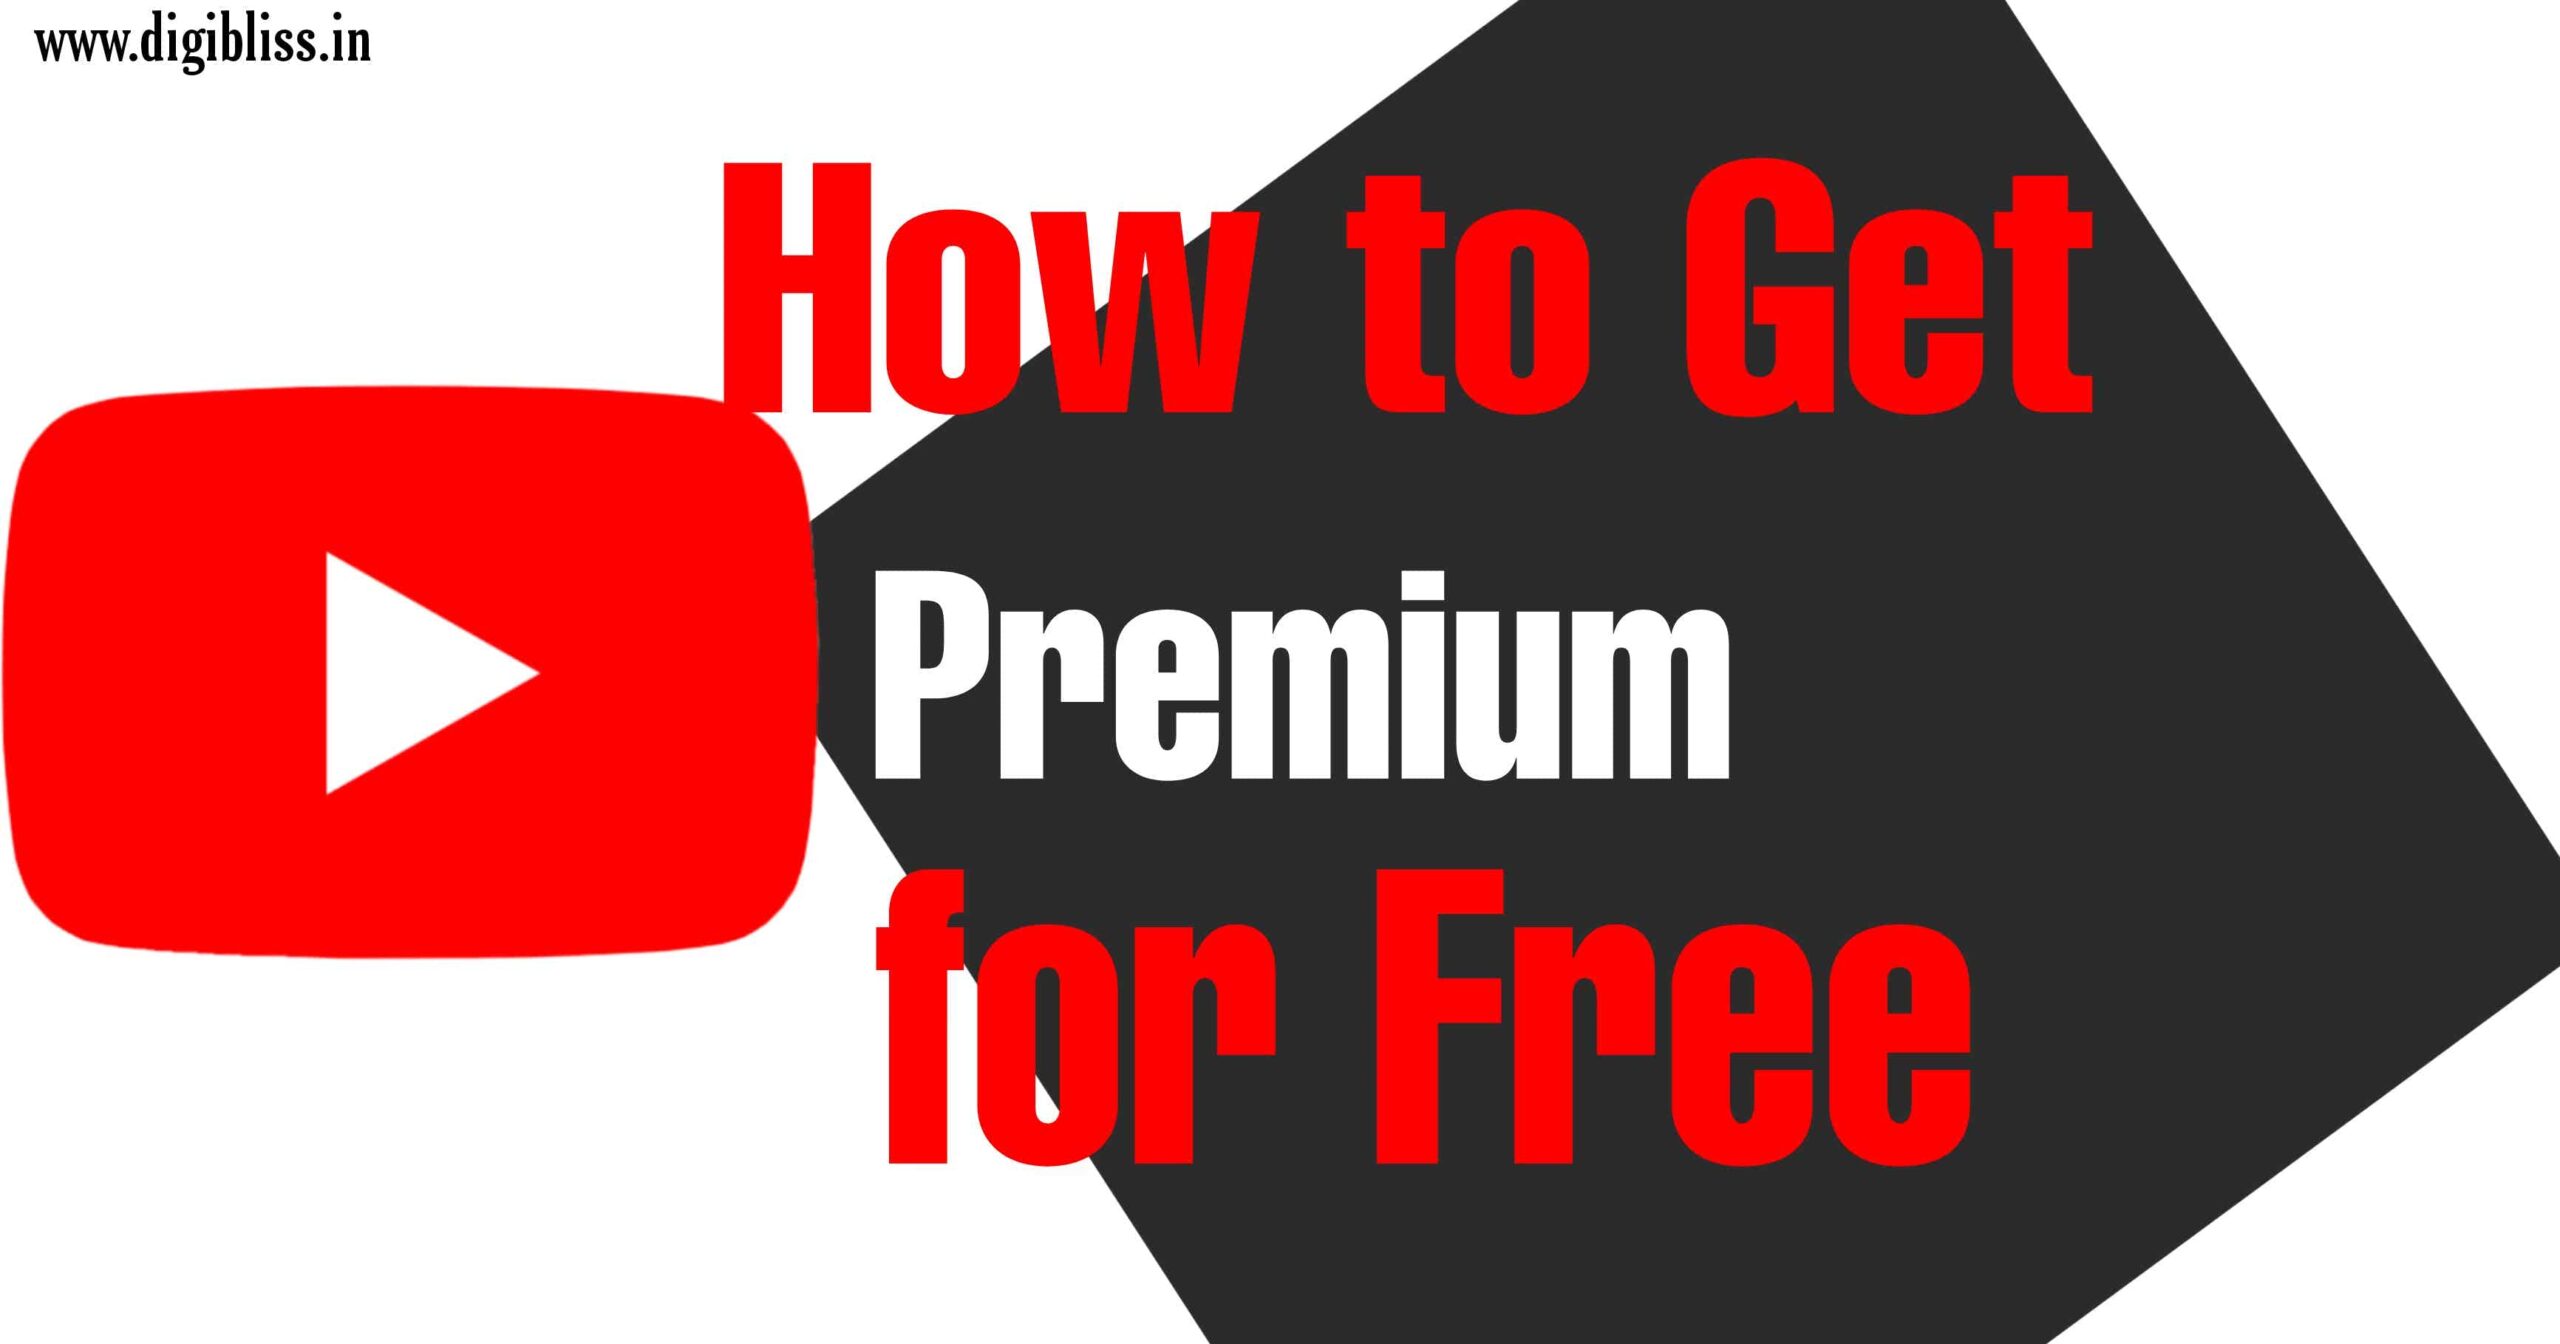 Youtube Premium For Free